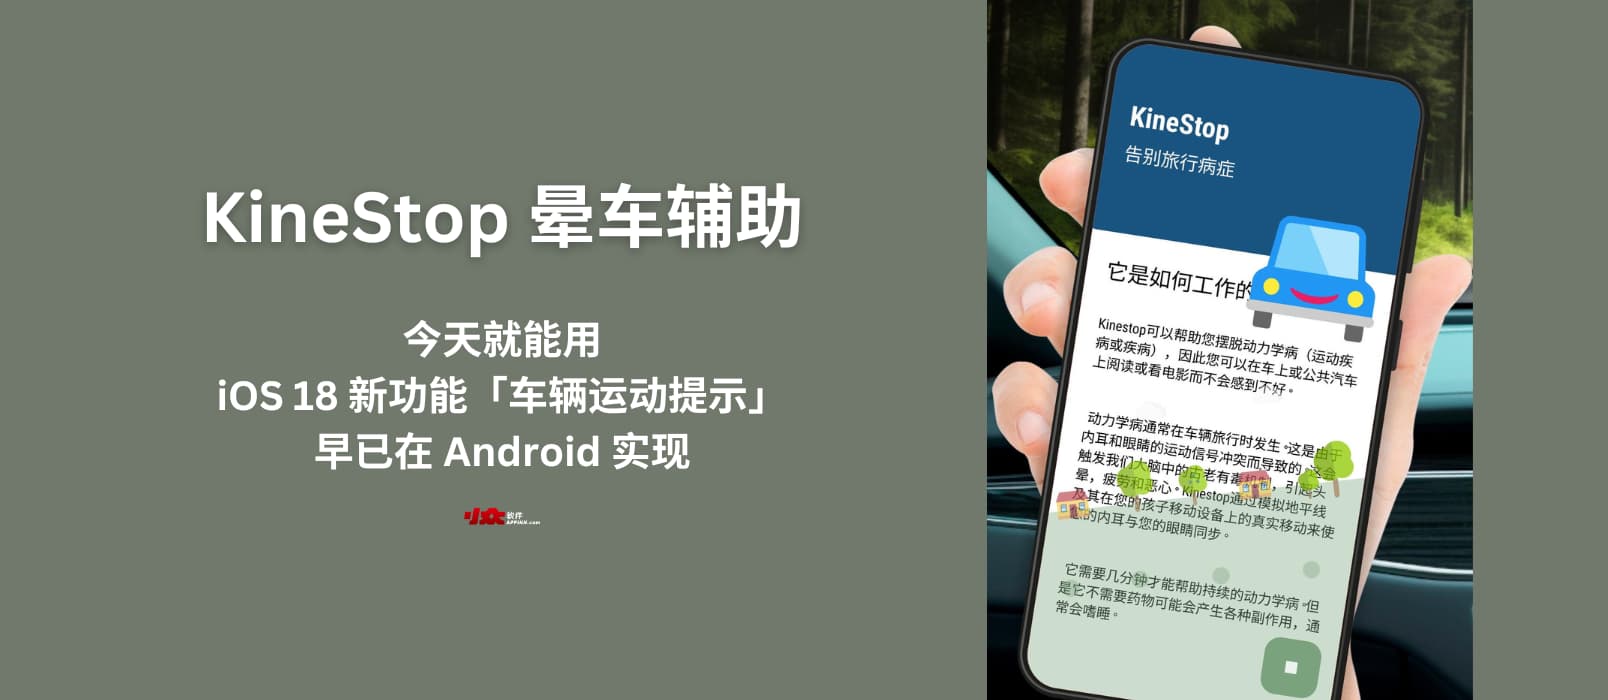 KineStop 晕车援助：iOS 18 新功能「车辆运动提示」早已在 Android 实现，今天就能用